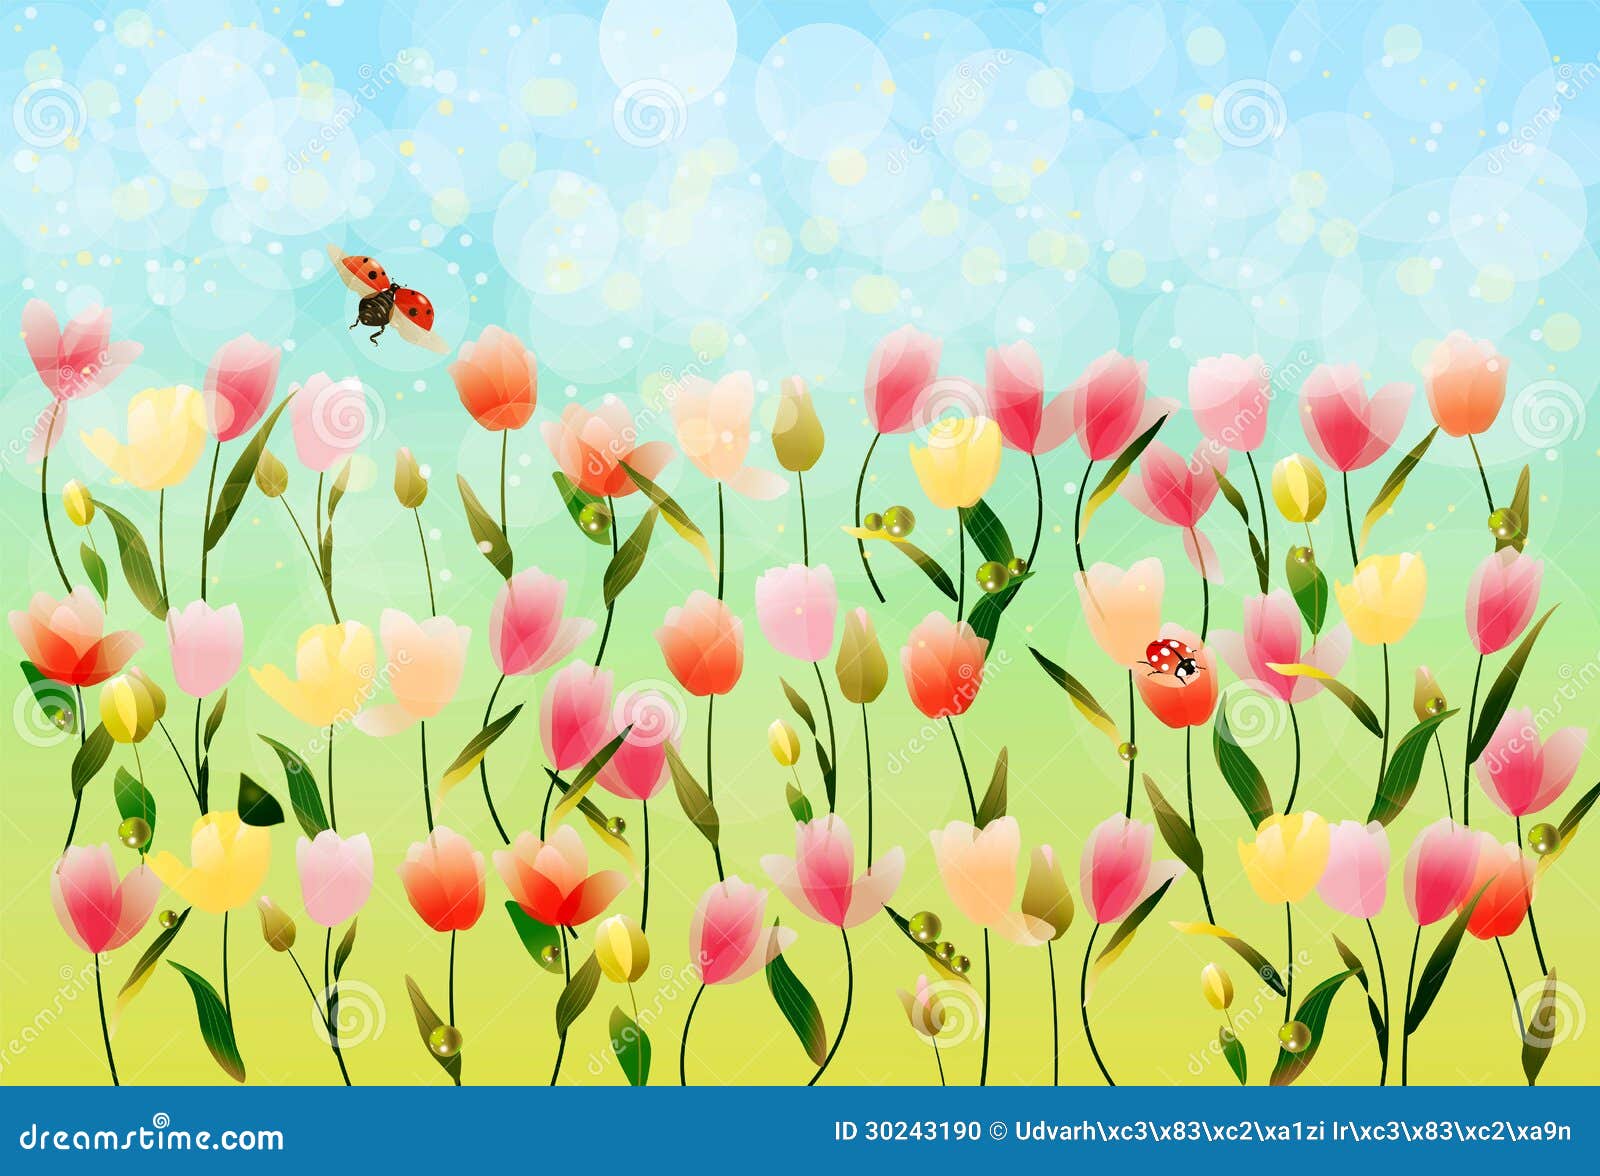 Tulips garden stock illustration. Illustration of floral - 30243190